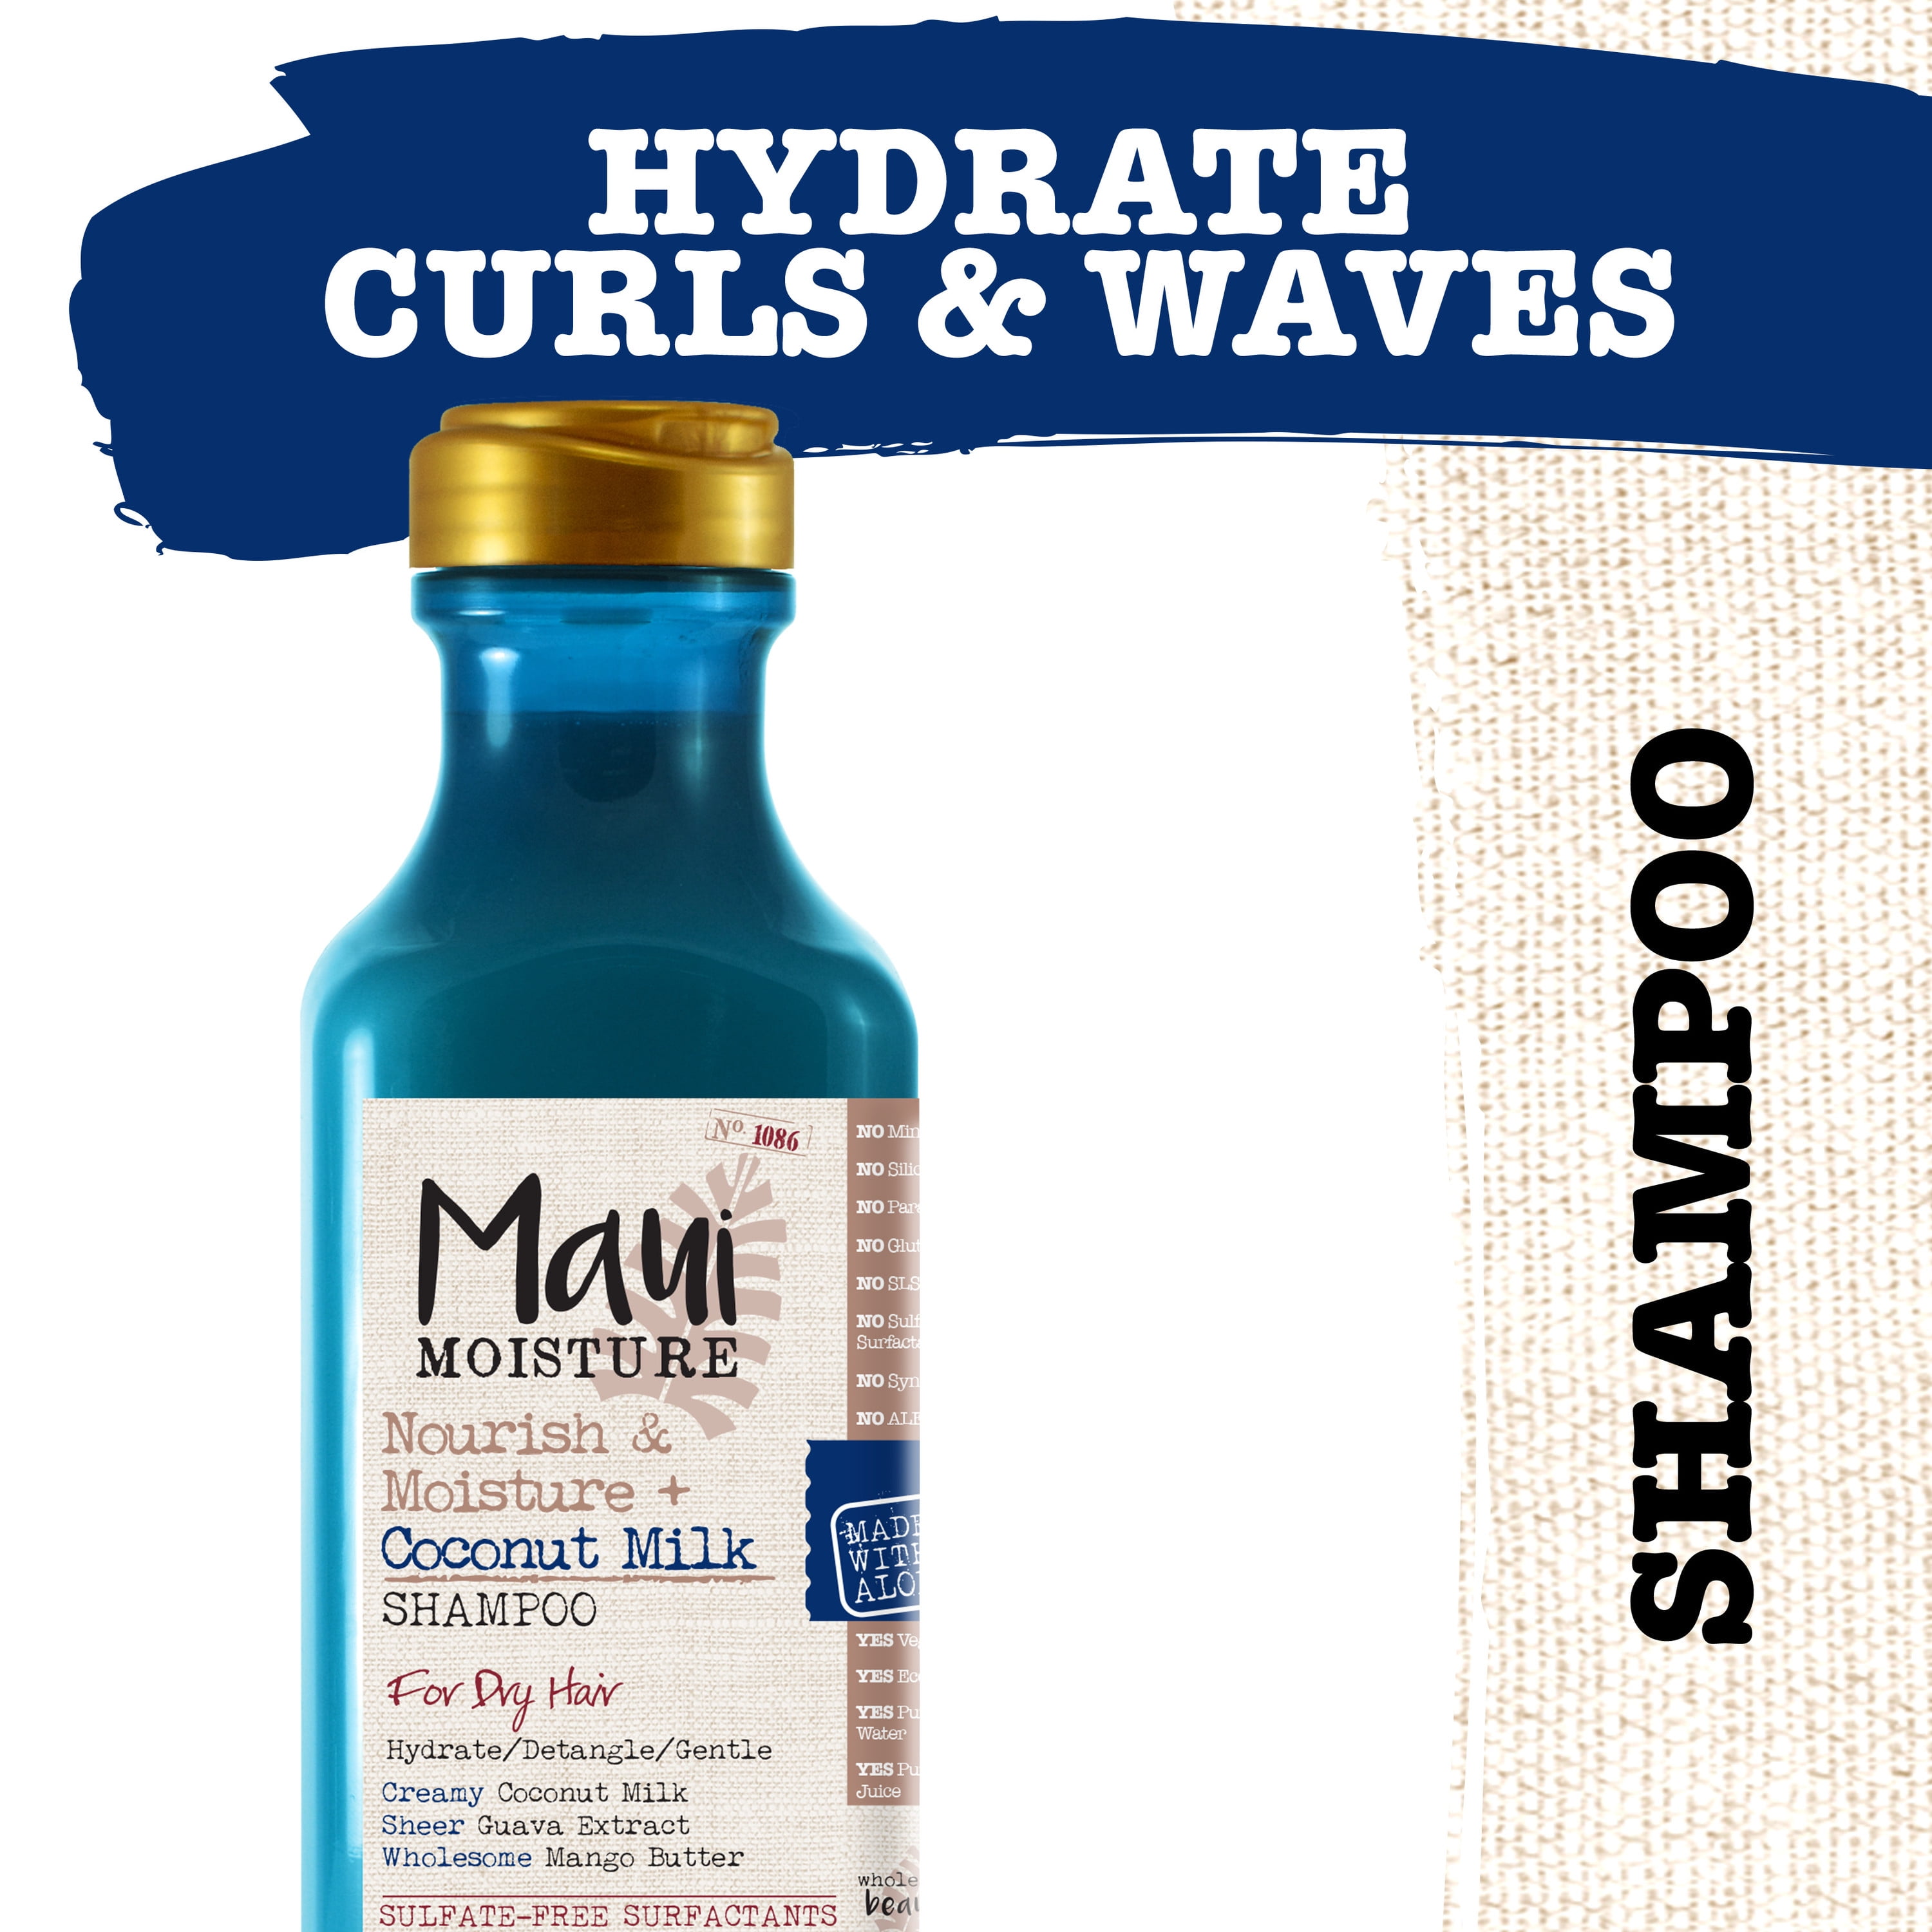 Maui & Moisture + Coconut Milk Shampoo to Hydrate and Detangle Hair, Lightweight Daily Moisturizing Shampoo, Vegan, Silicone & Paraben-Free, fl oz - Walmart.com